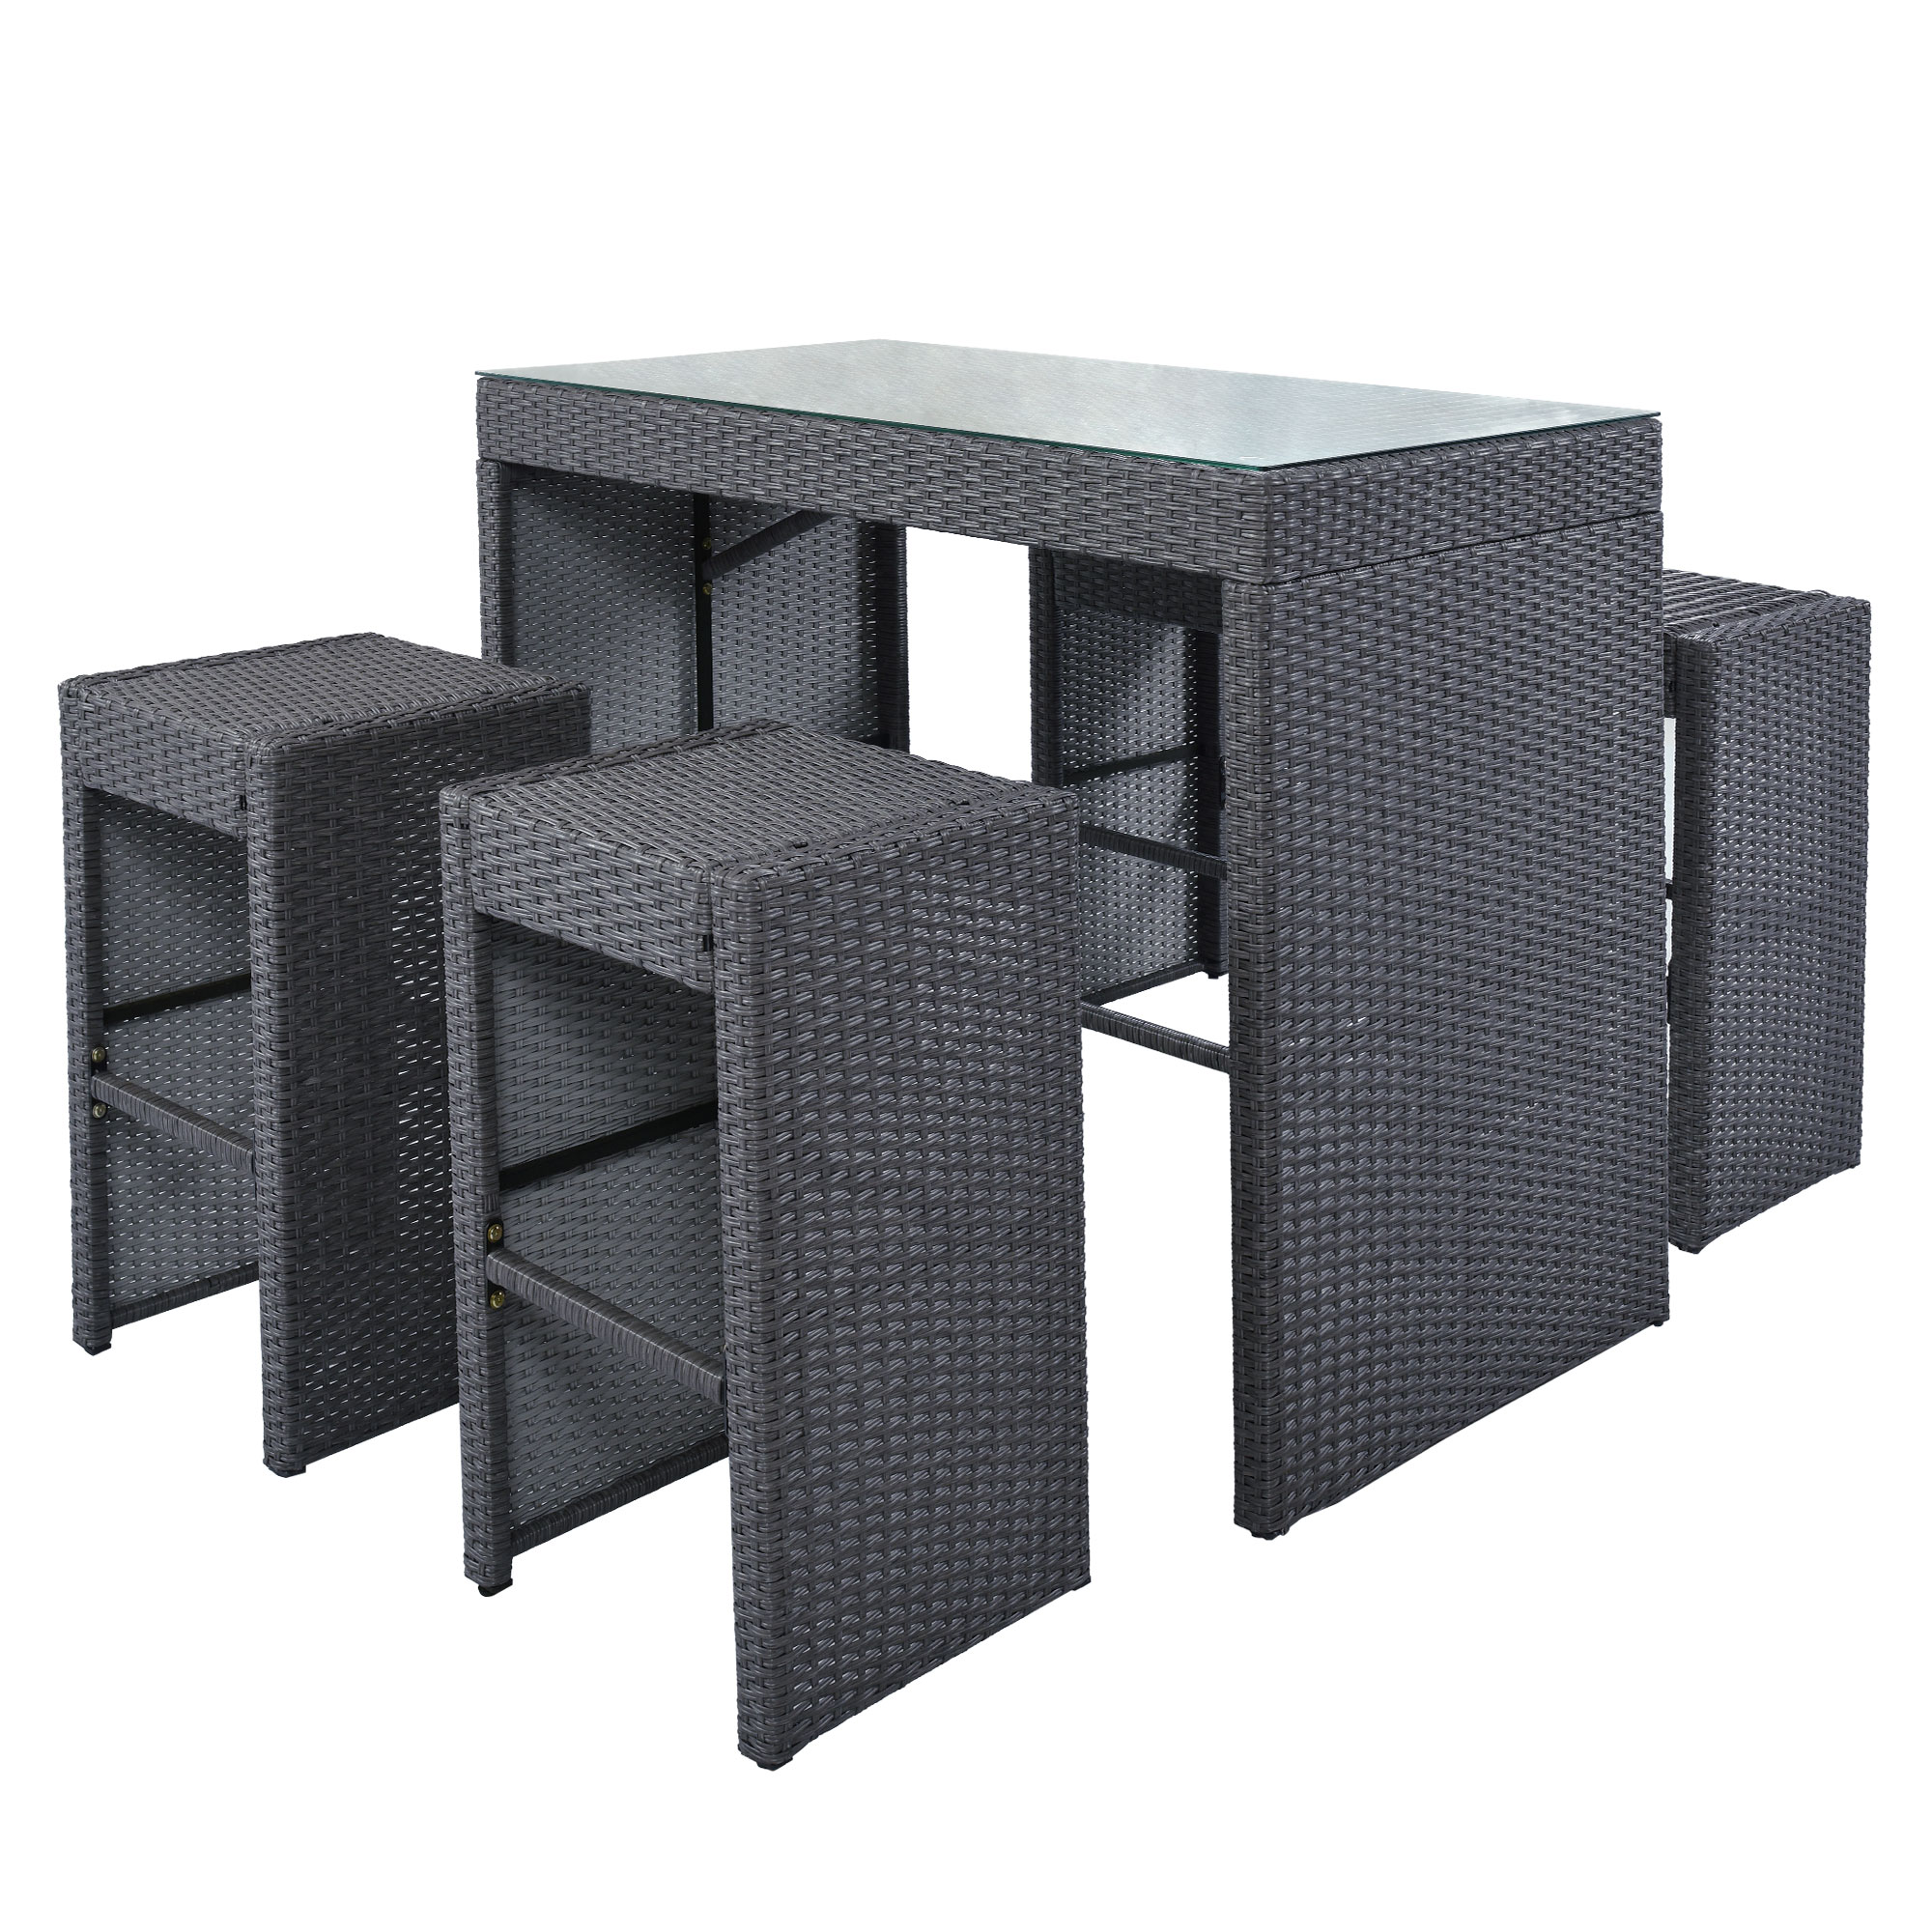 5-piece Rattan Outdoor Patio Furniture Set Bar Dining Table Set with 4 Stools, Gray Cushion+Gray Wicker-CASAINC